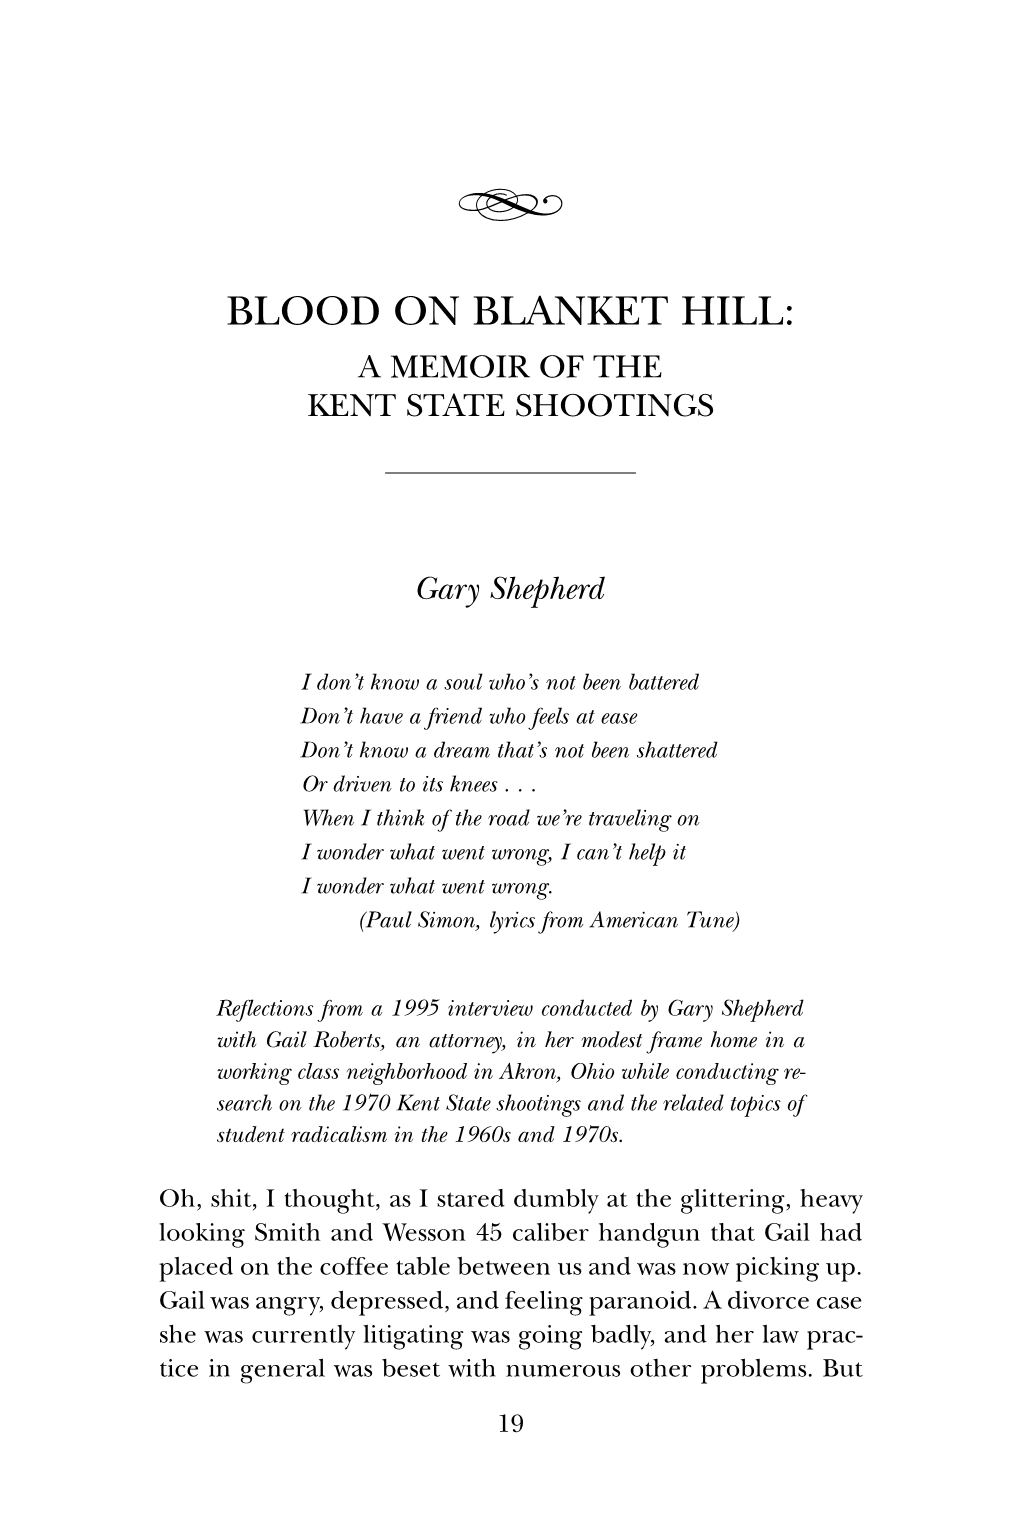 Blood on Blanket Hill: a Memoir of the Kent State Shootings